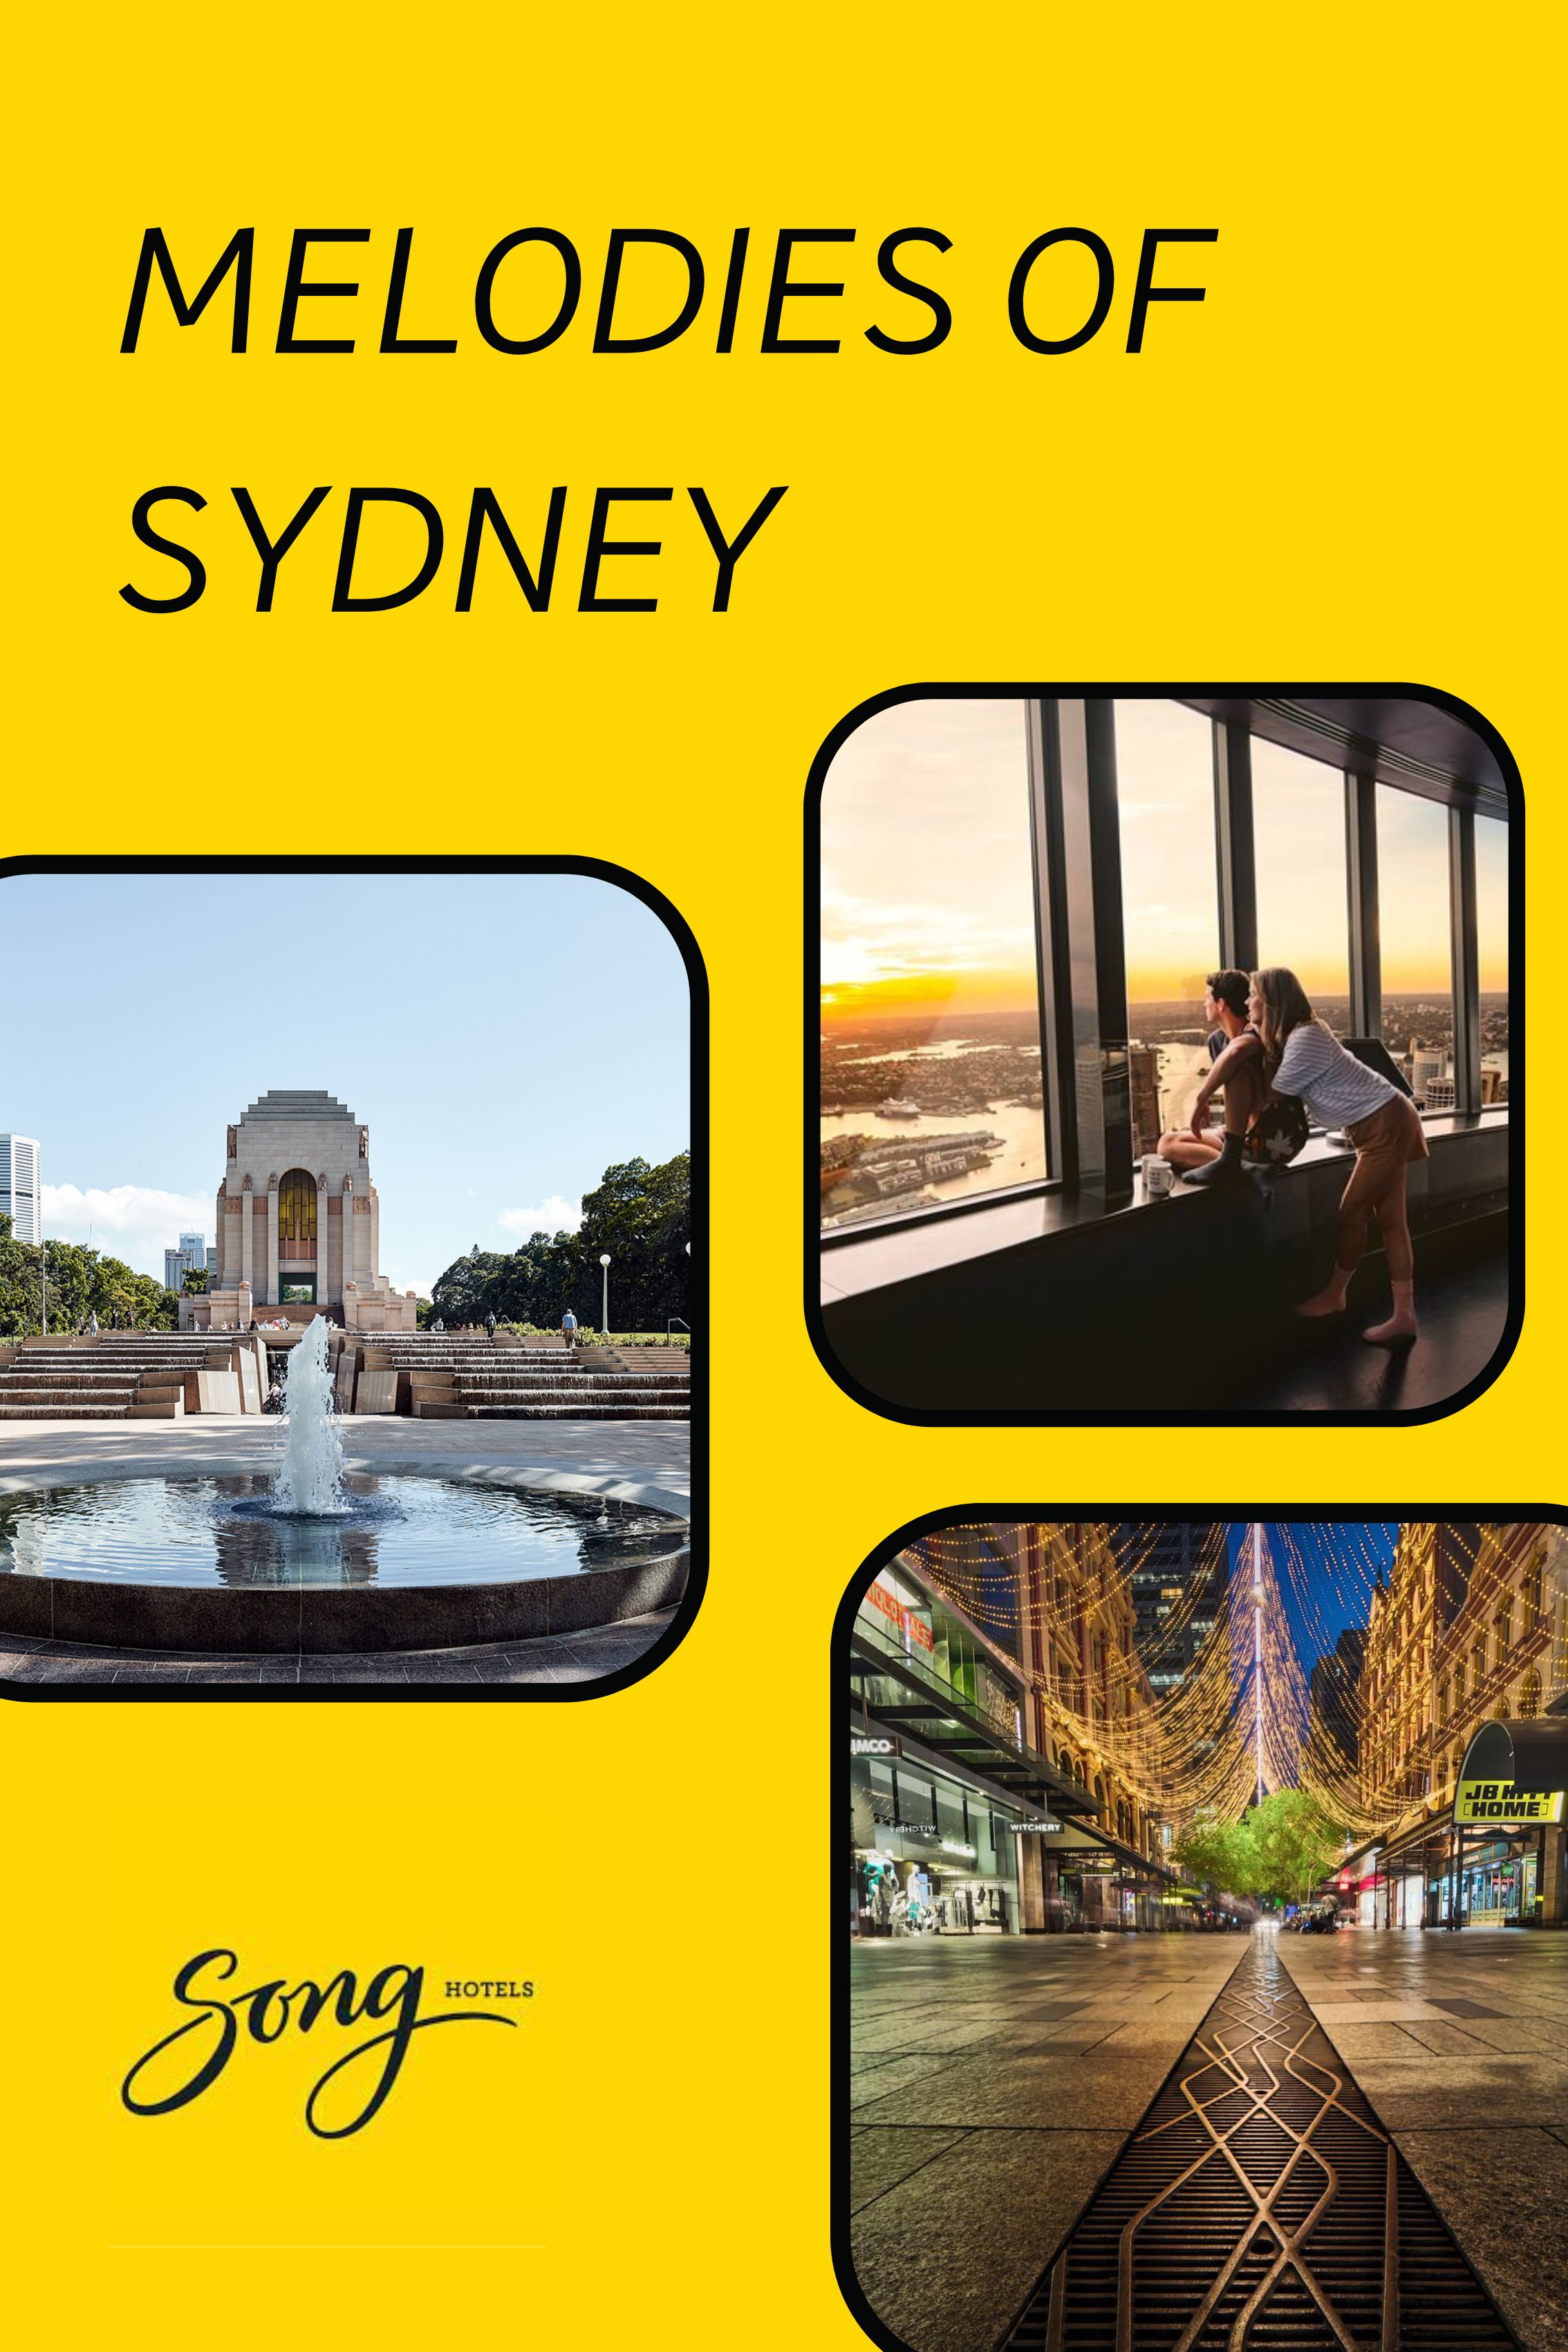 Song Hotel Sydney: Melodies of Sydney